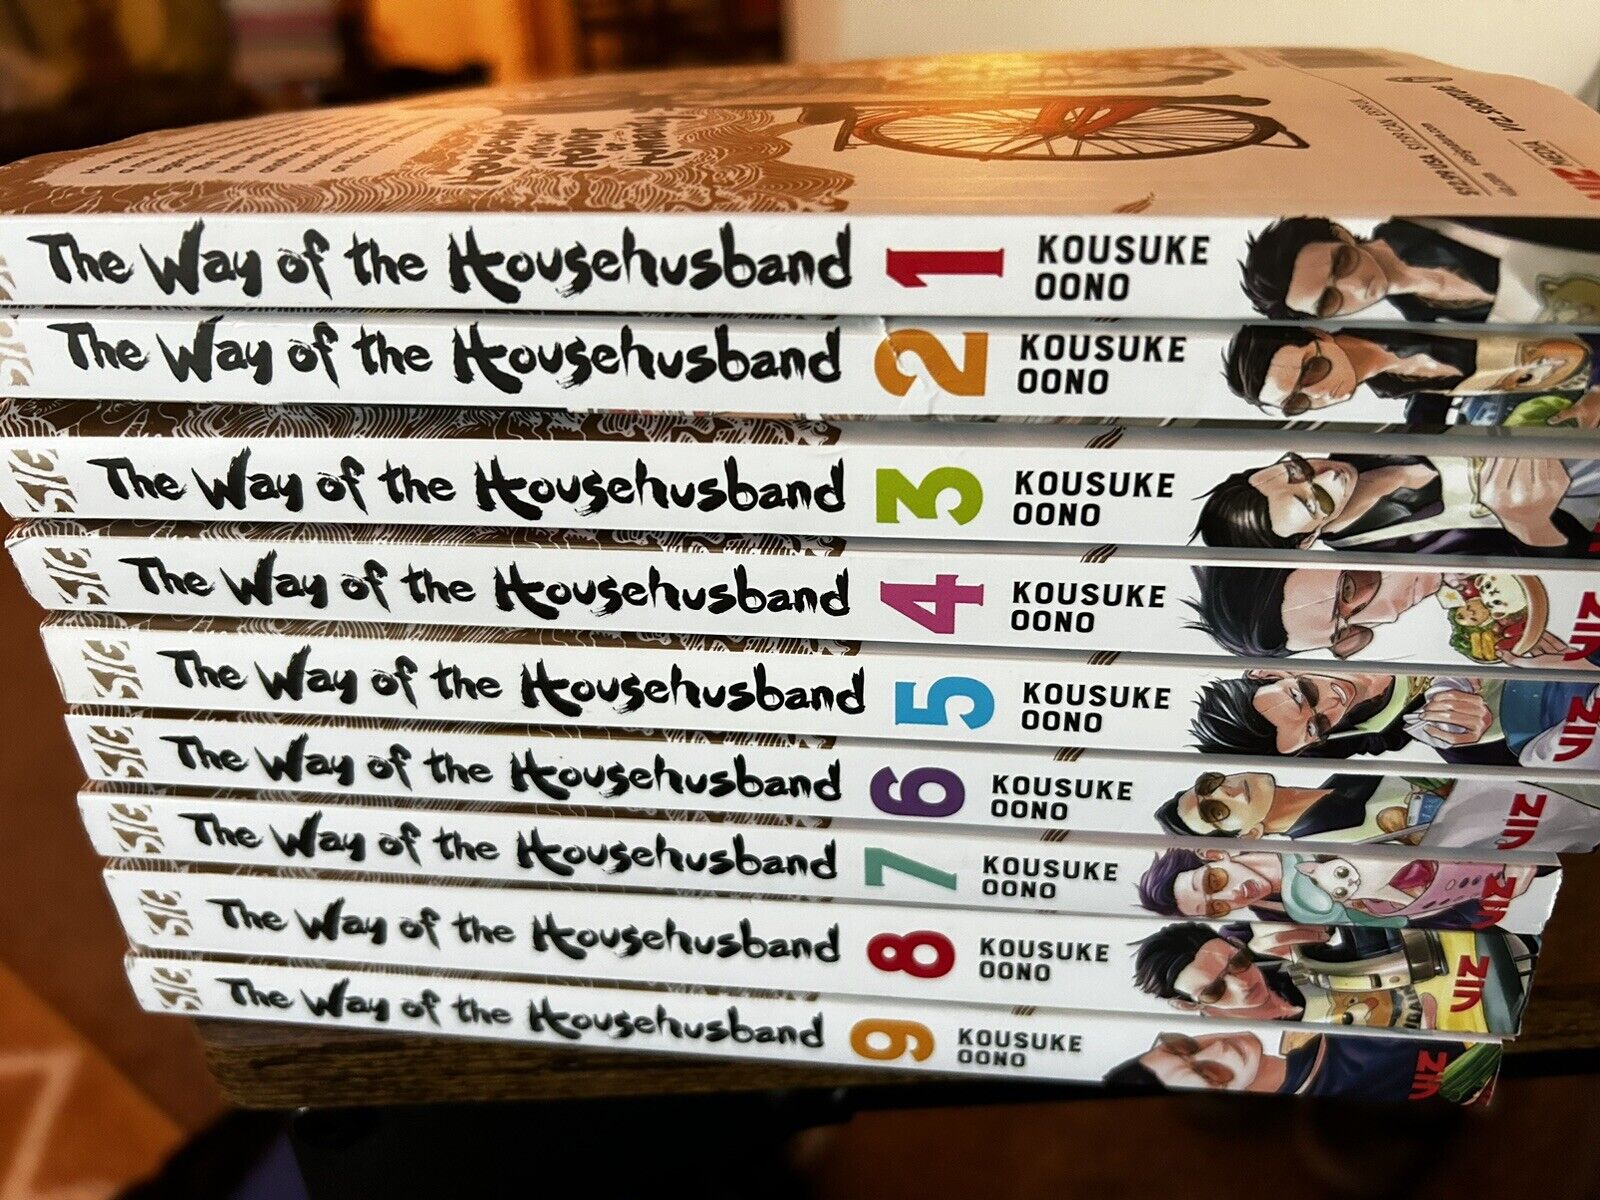 The Way of the House husband English Manga 1-9 Book Viz Media 1 2 3 4 5 6 7 8 9